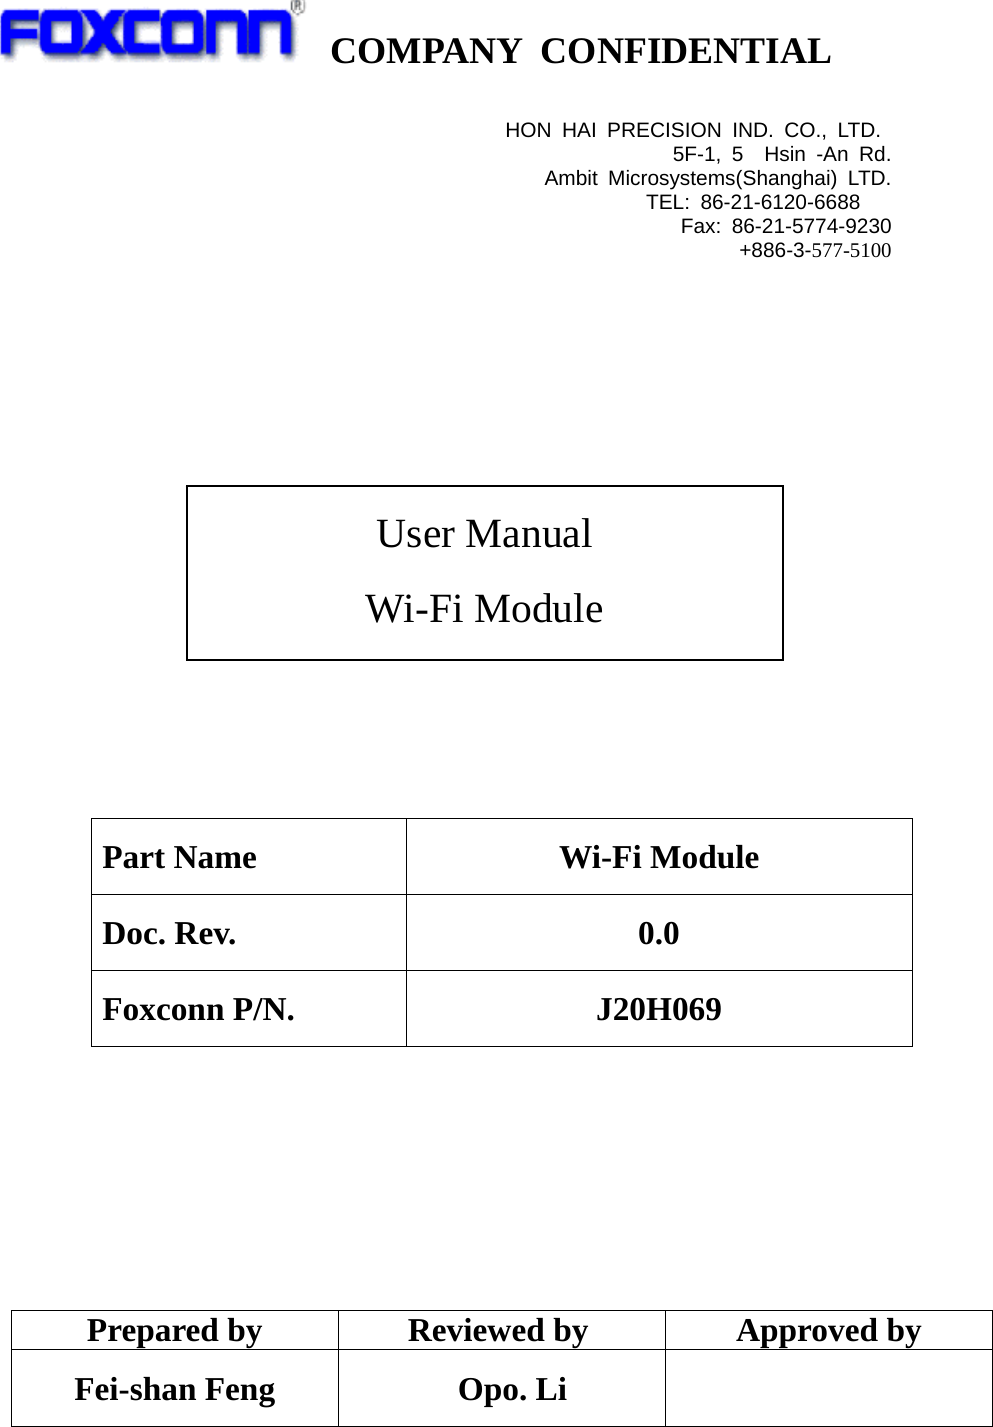   COMPANY CONFIDENTIAL                                Part Name  Wi-Fi Module Doc. Rev.  0.0 Foxconn P/N.  J20H069        Prepared by  Reviewed by  Approved by Fei-shan Feng         Opo. Li   User Manual Wi-Fi Module HON HAI PRECISION IND. CO., LTD.  5F-1, 5  Hsin -An Rd. Ambit Microsystems(Shanghai) LTD. TEL: 86-21-6120-6688    Fax: 86-21-5774-9230 +886-3-577-5100  